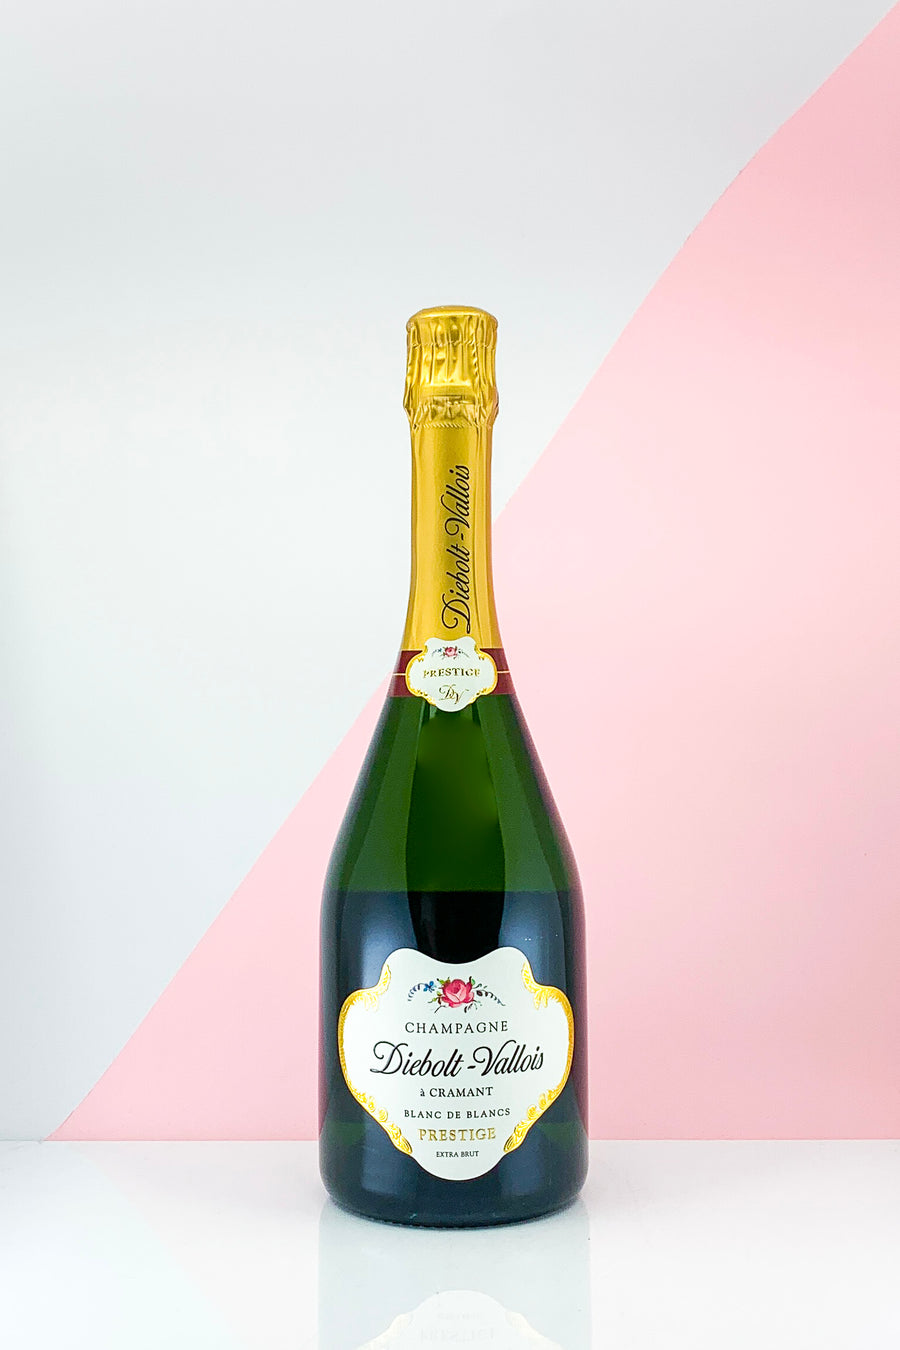 Champagne Diebolt-Vallois Prestige Grand Cru NV